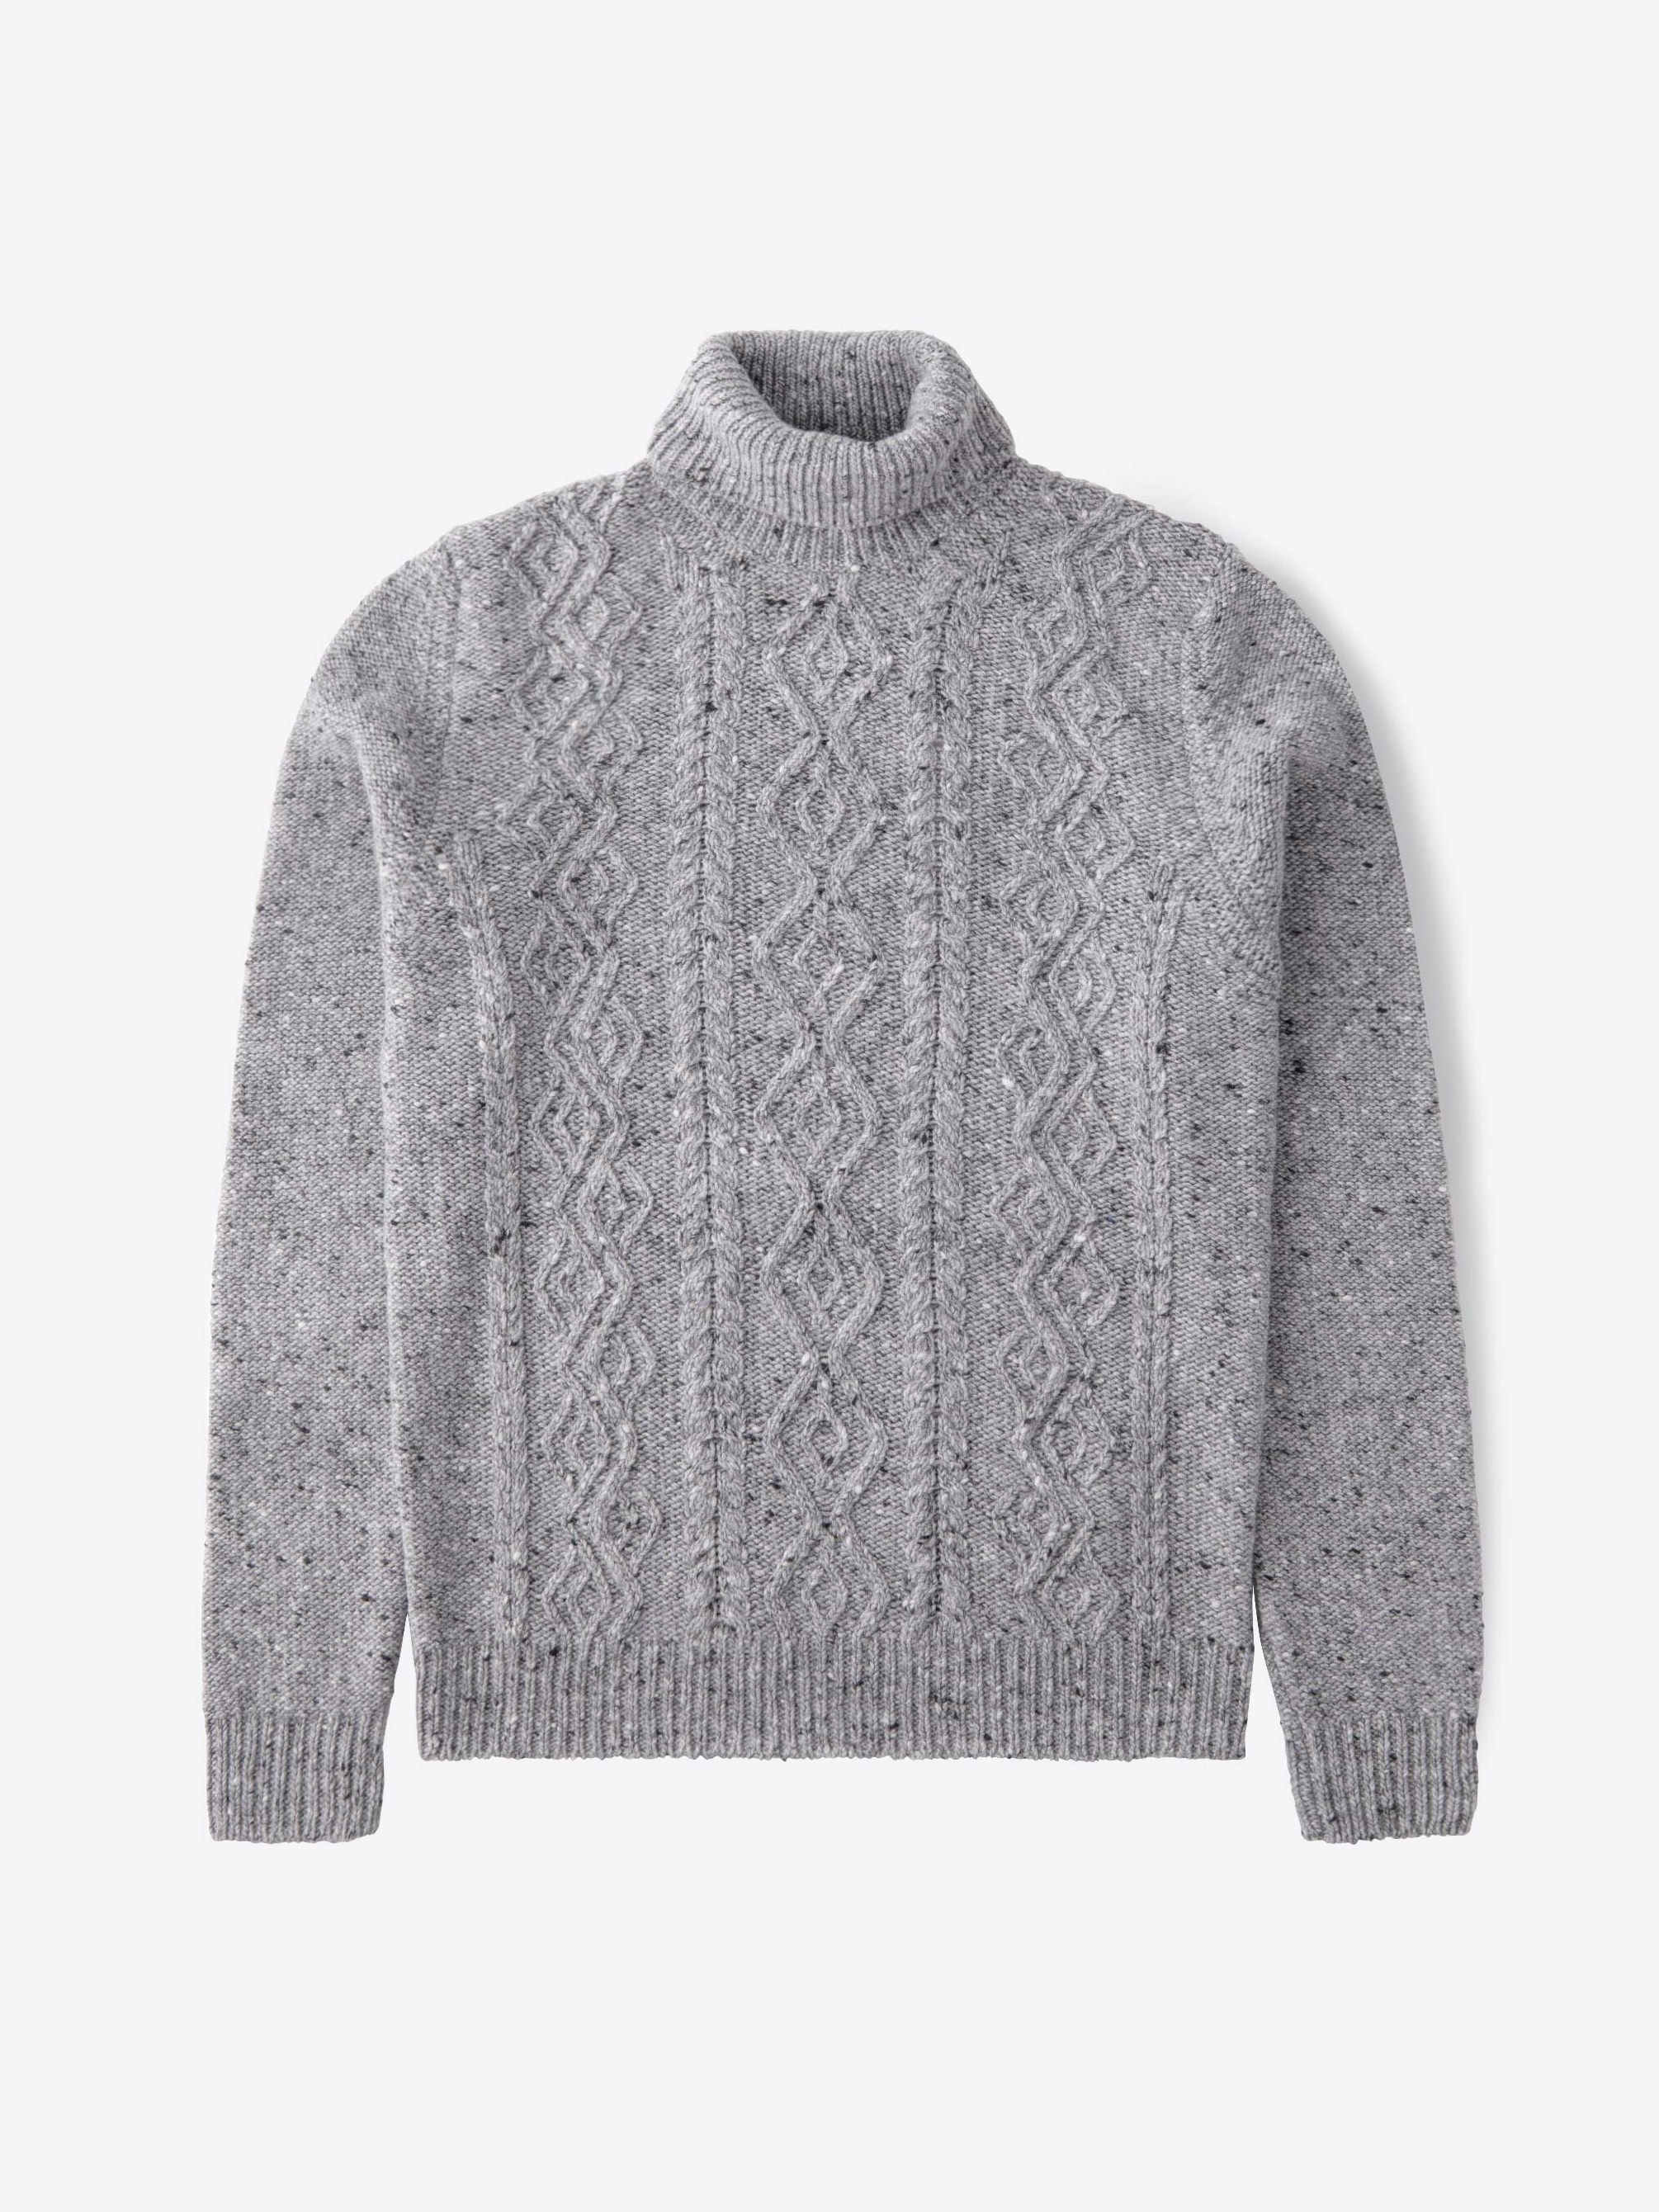 Zoom Image of Light Grey Italian Wool and Cashmere Aran Turtleneck Sweater